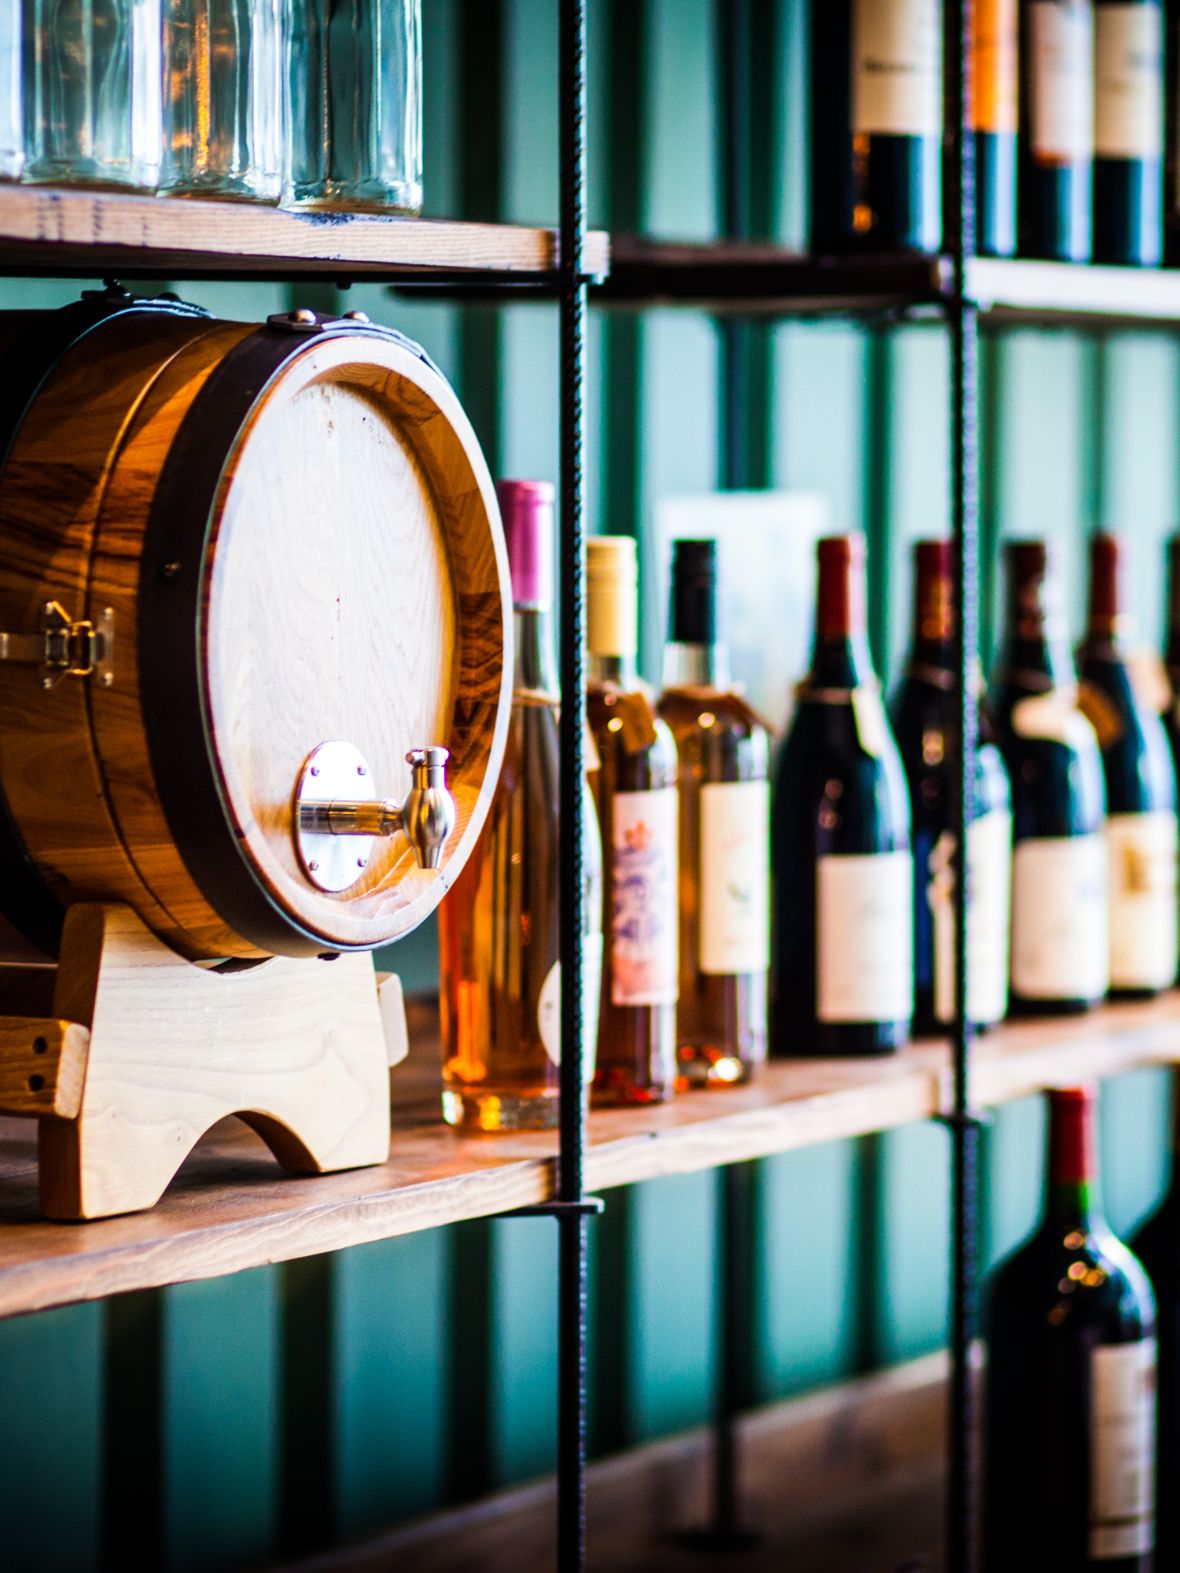 Wine barrel and bottles of wine on shelves